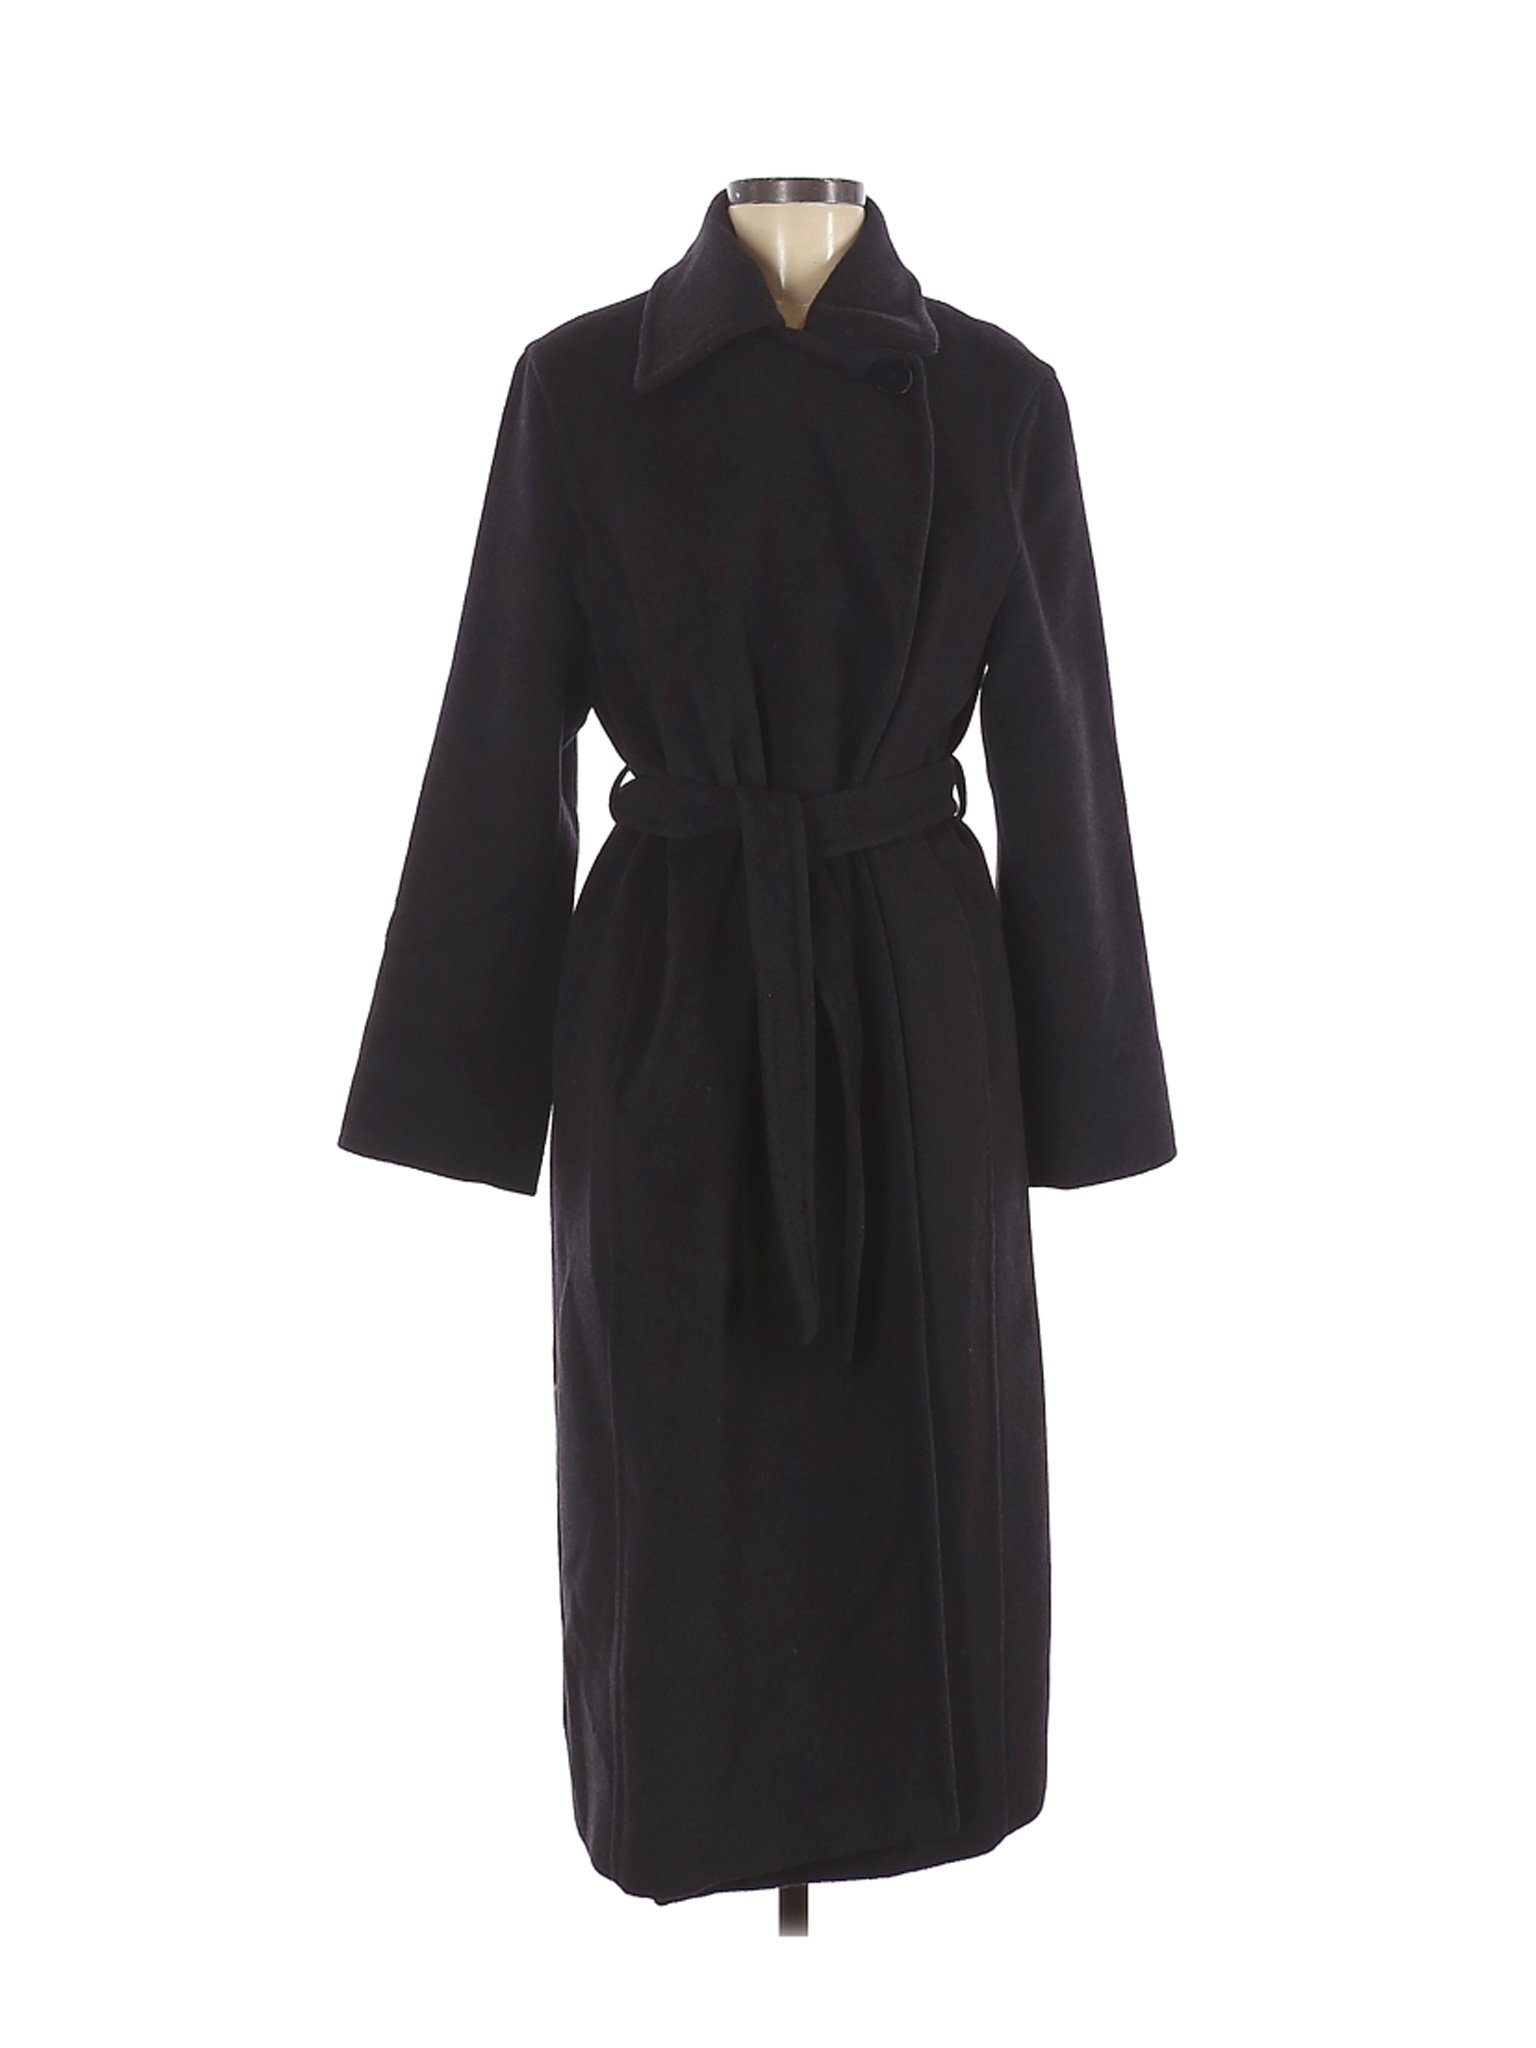 Max Mara Women Black Wool Coat 8 | eBay